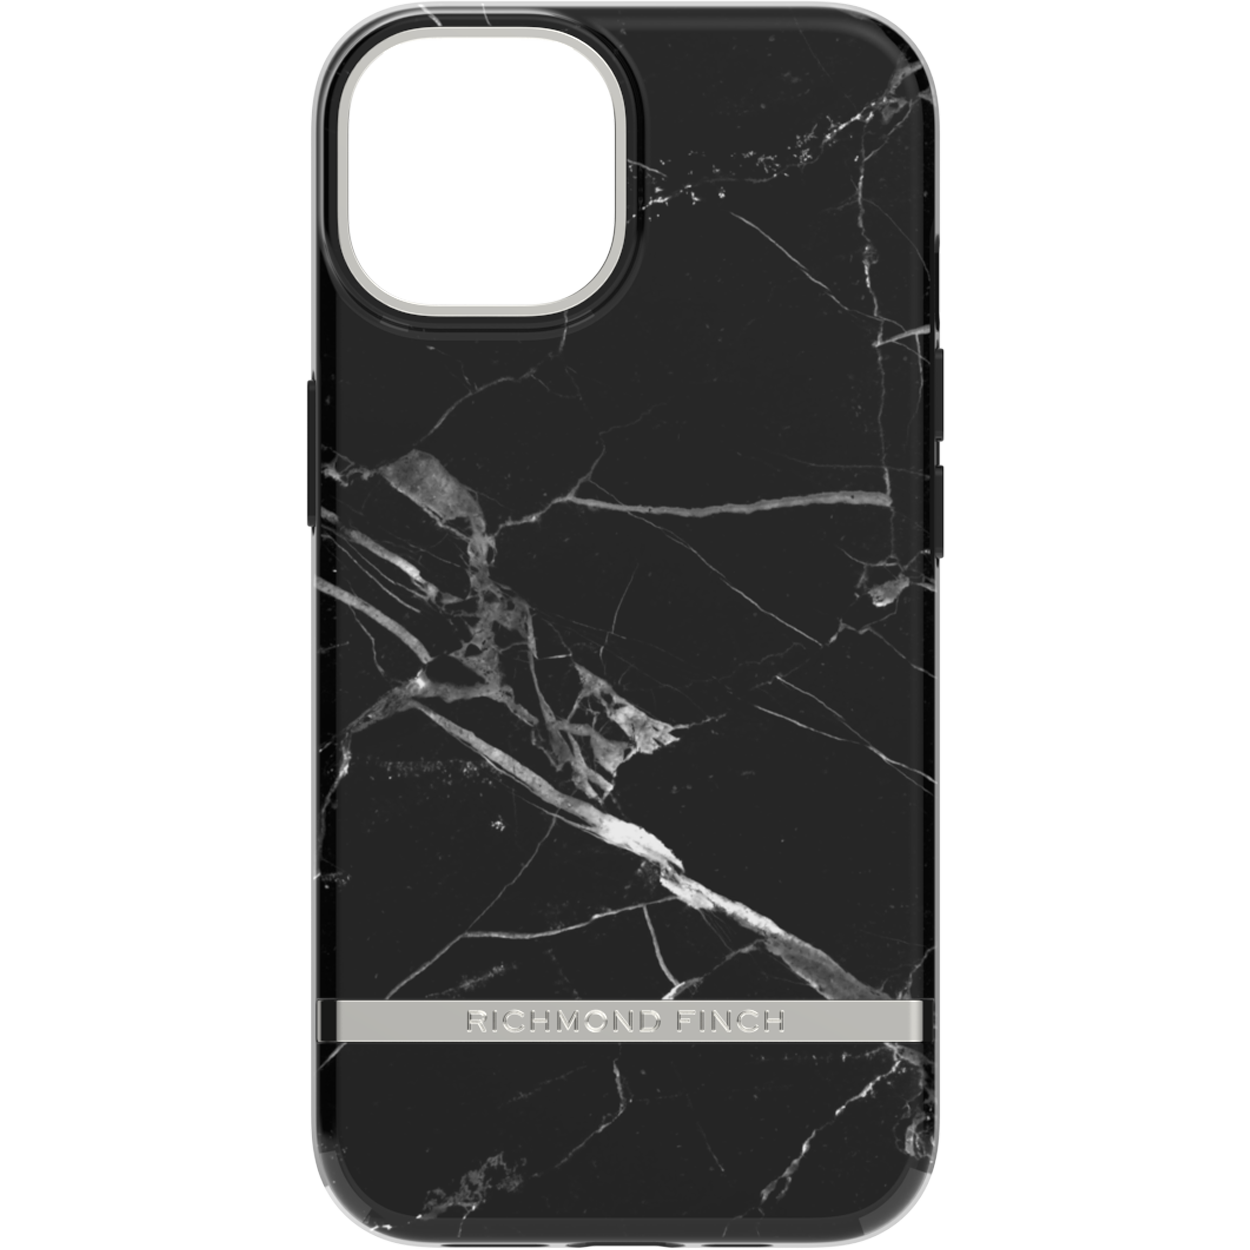 iPhone Case Black Marble